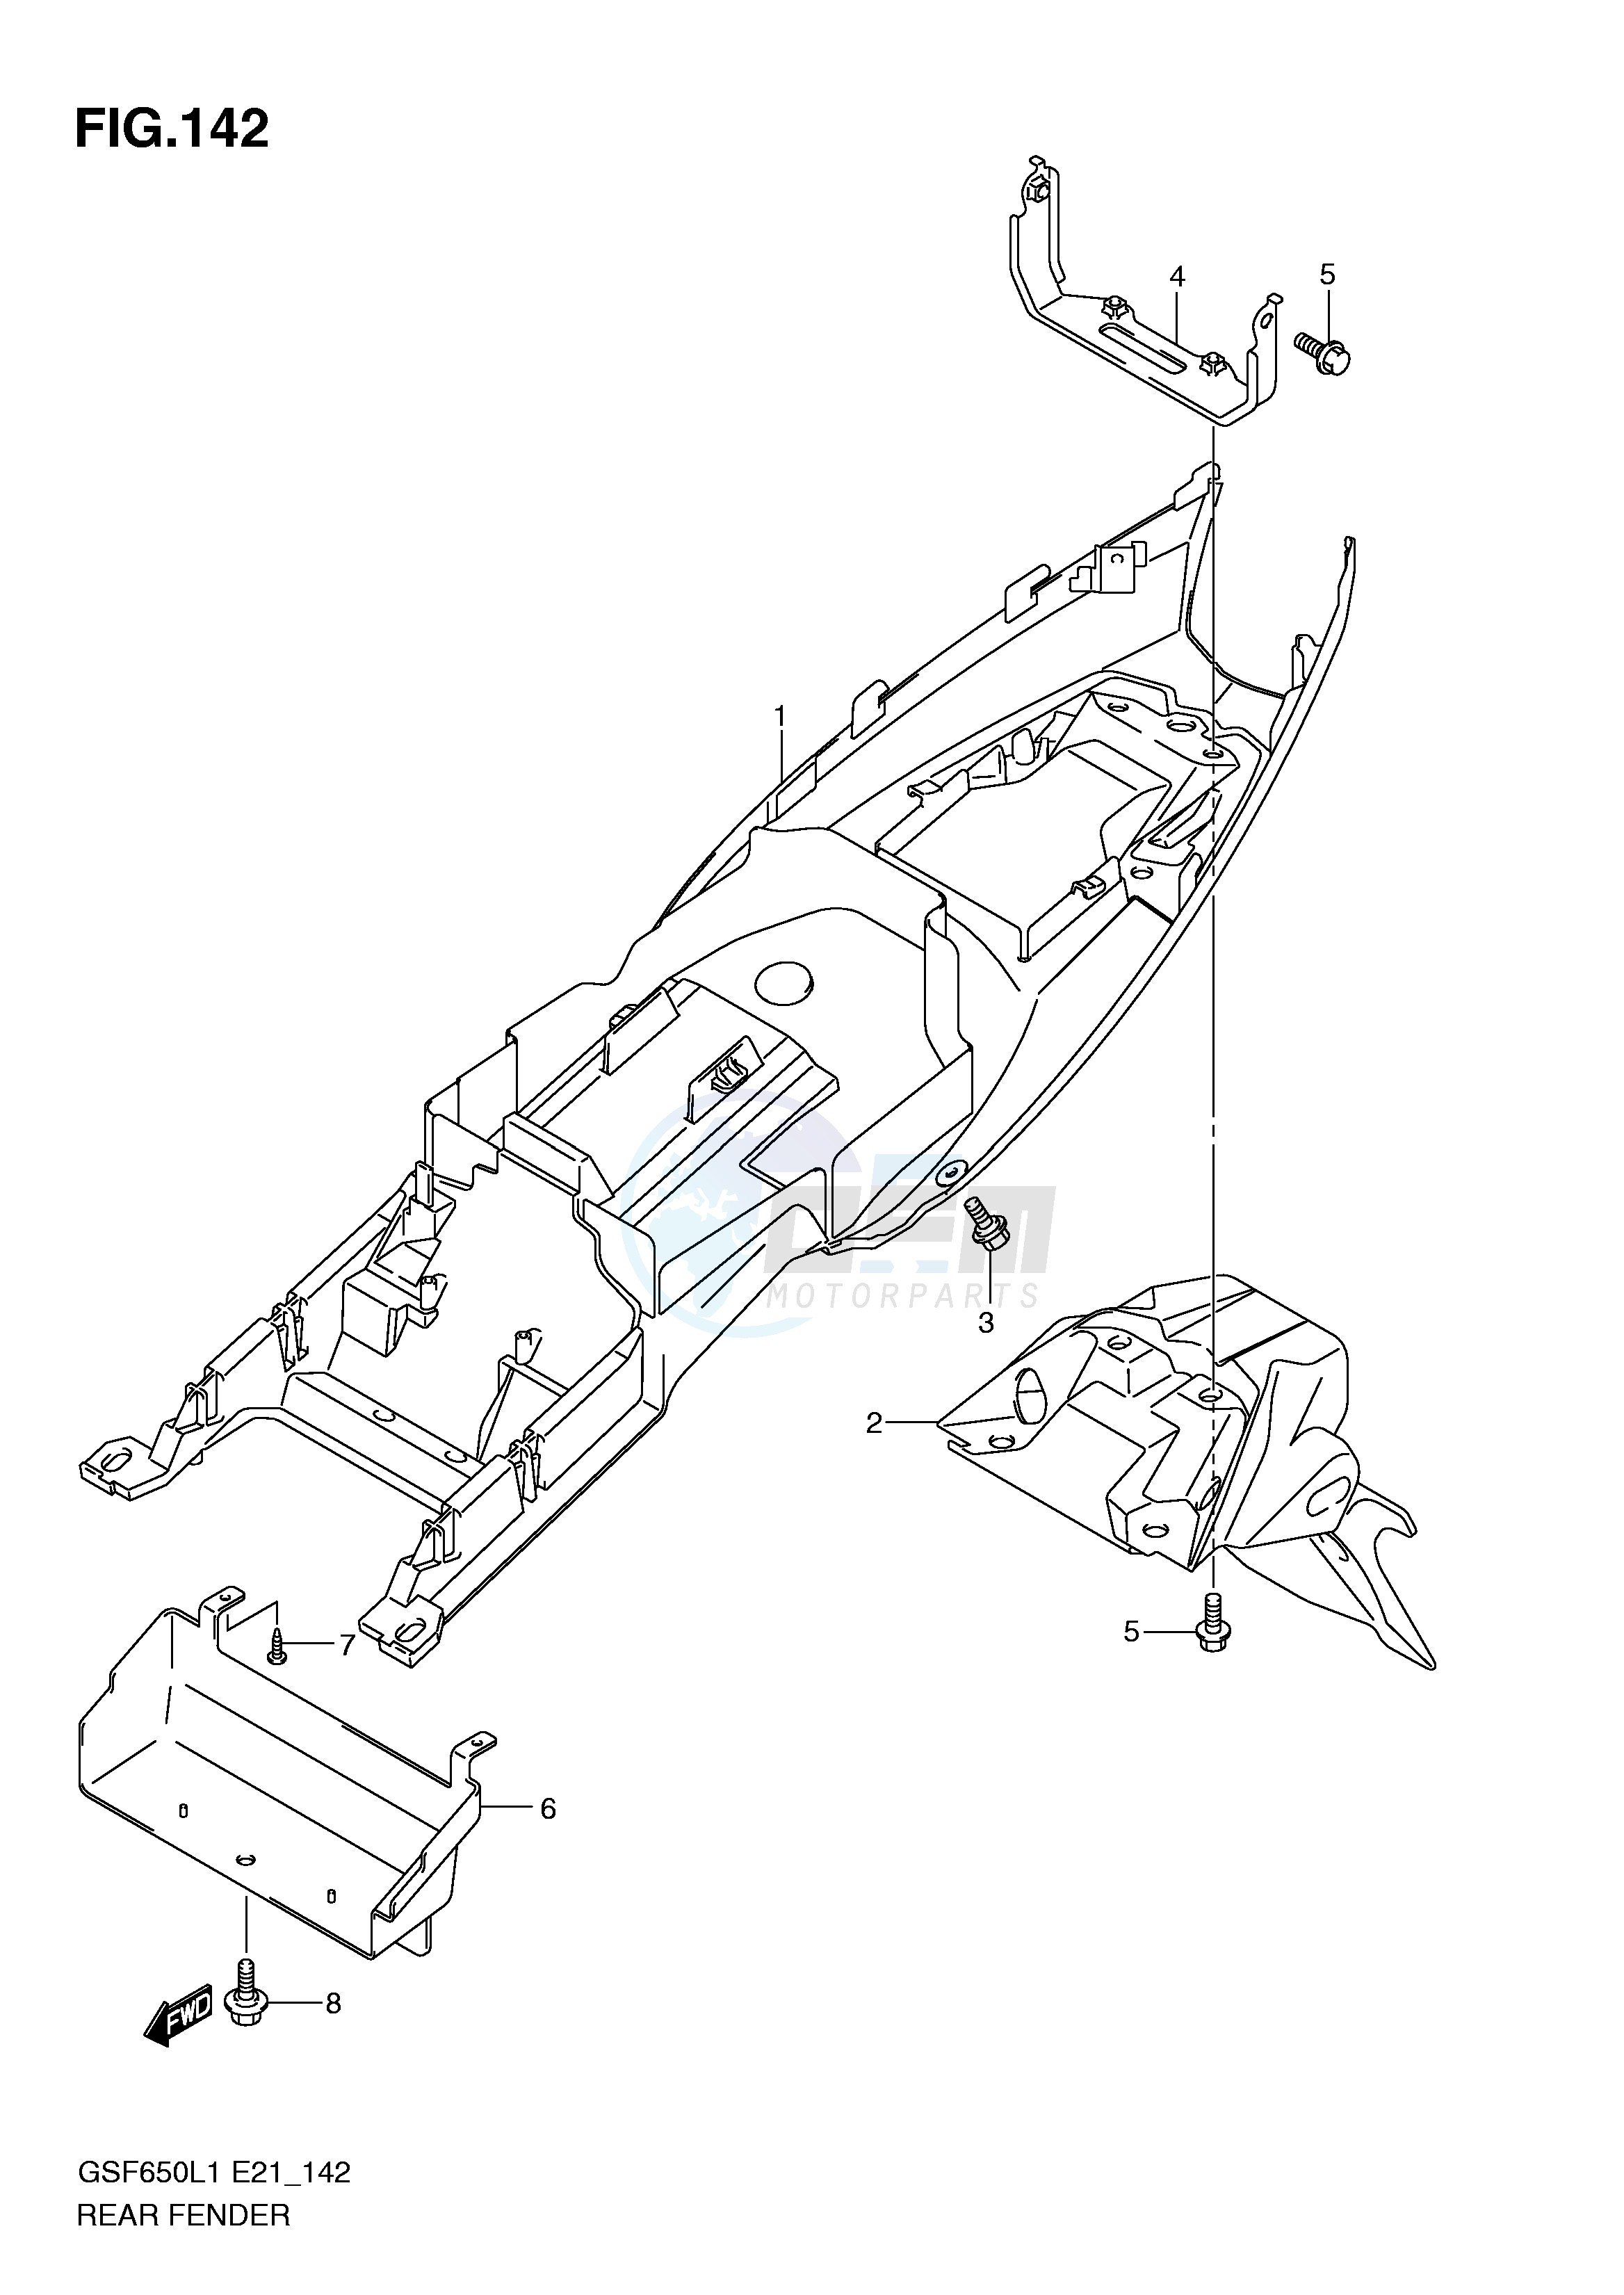 REAR FENDER (GSF650SUAL1 E21) blueprint